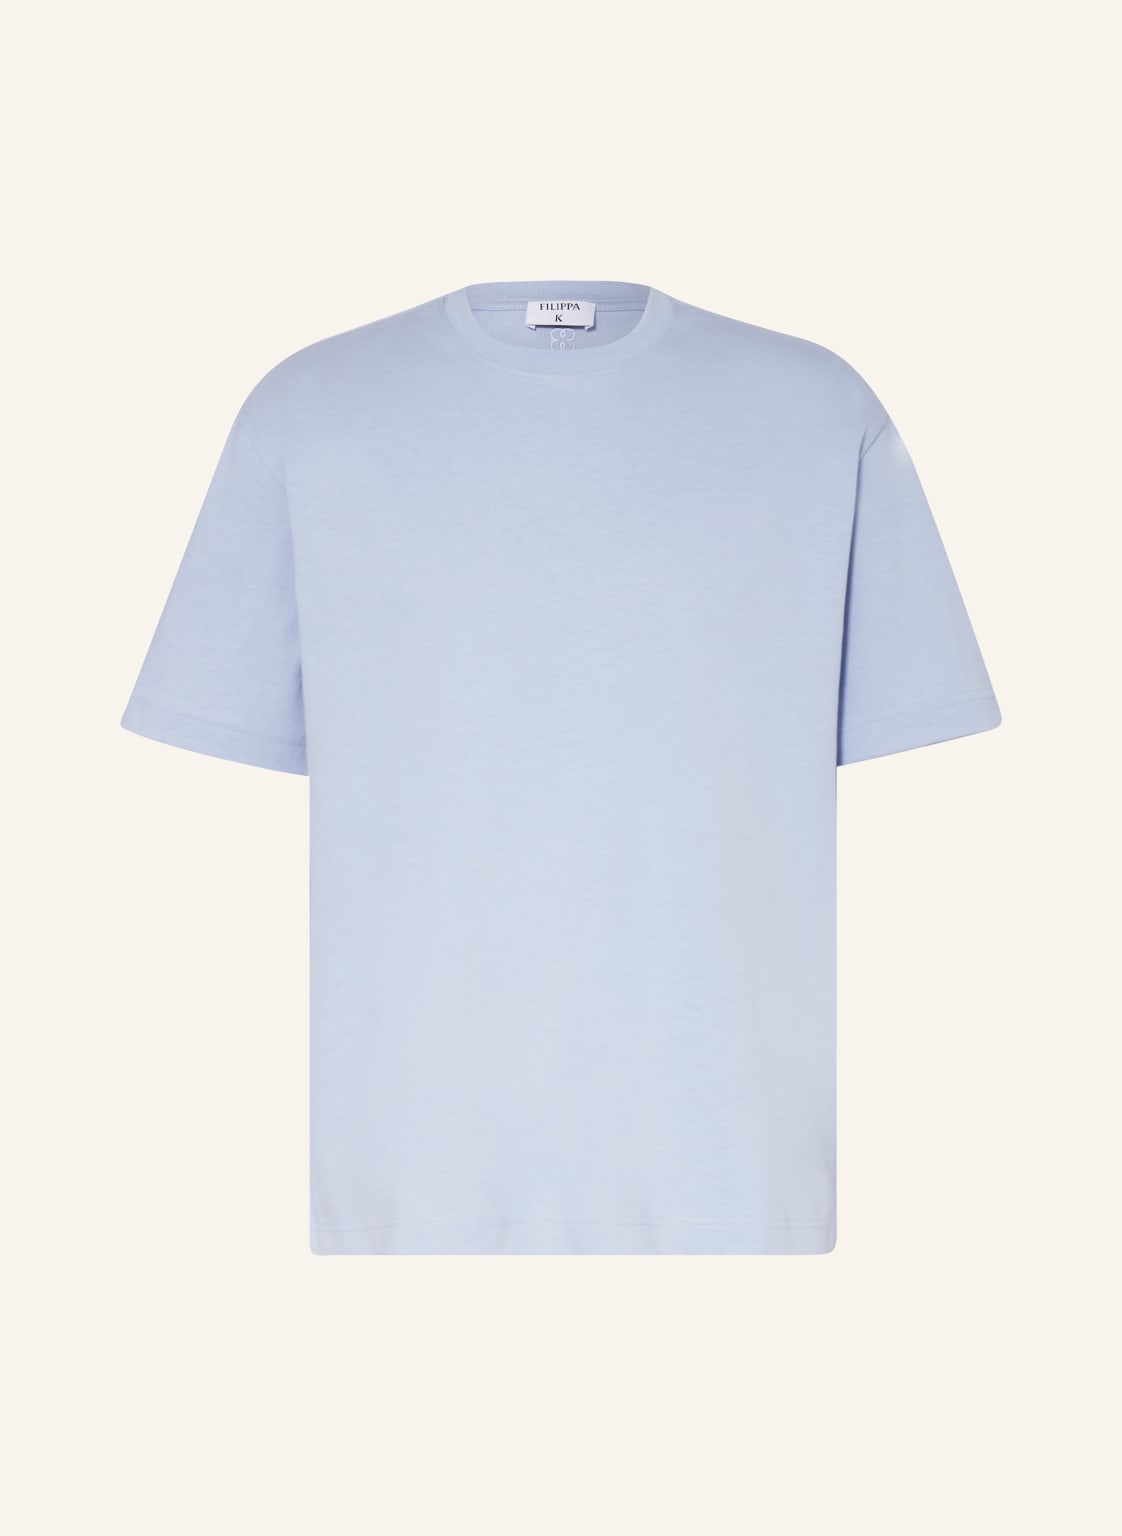 Filippa K T-Shirt blau von Filippa K